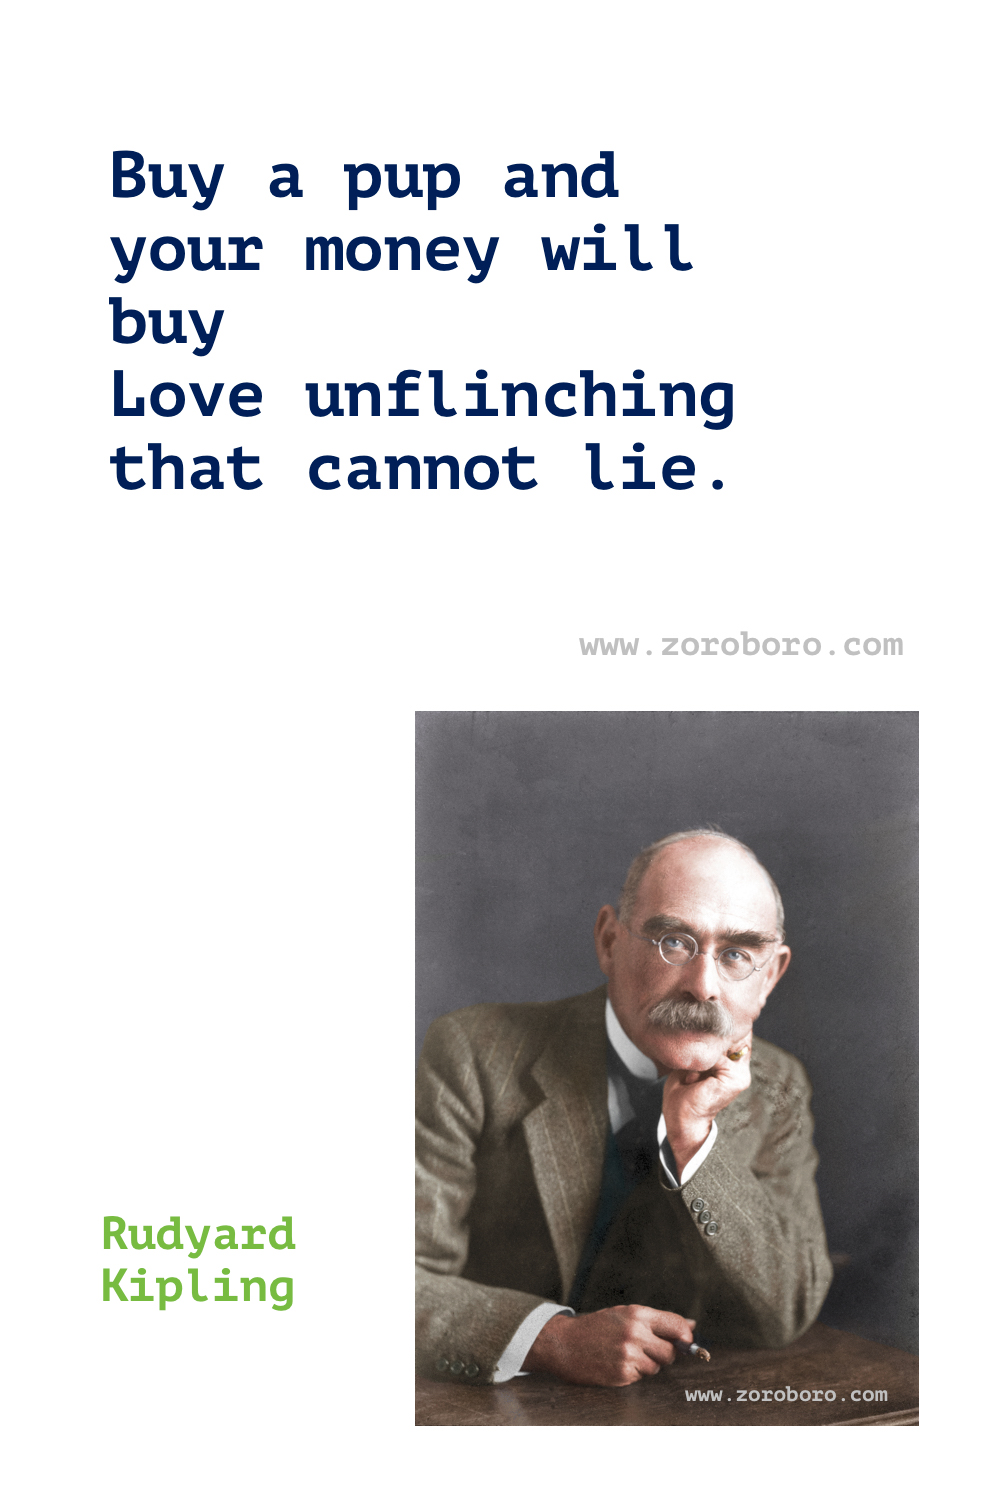 Rudyard Kipling Quotes. Rudyard Kipling Poems. Rudyard Kipling Poetry. Rudyard Kipling Books Quotes. Rudyard Kipling Short Poems, Jungle Book Quotes.